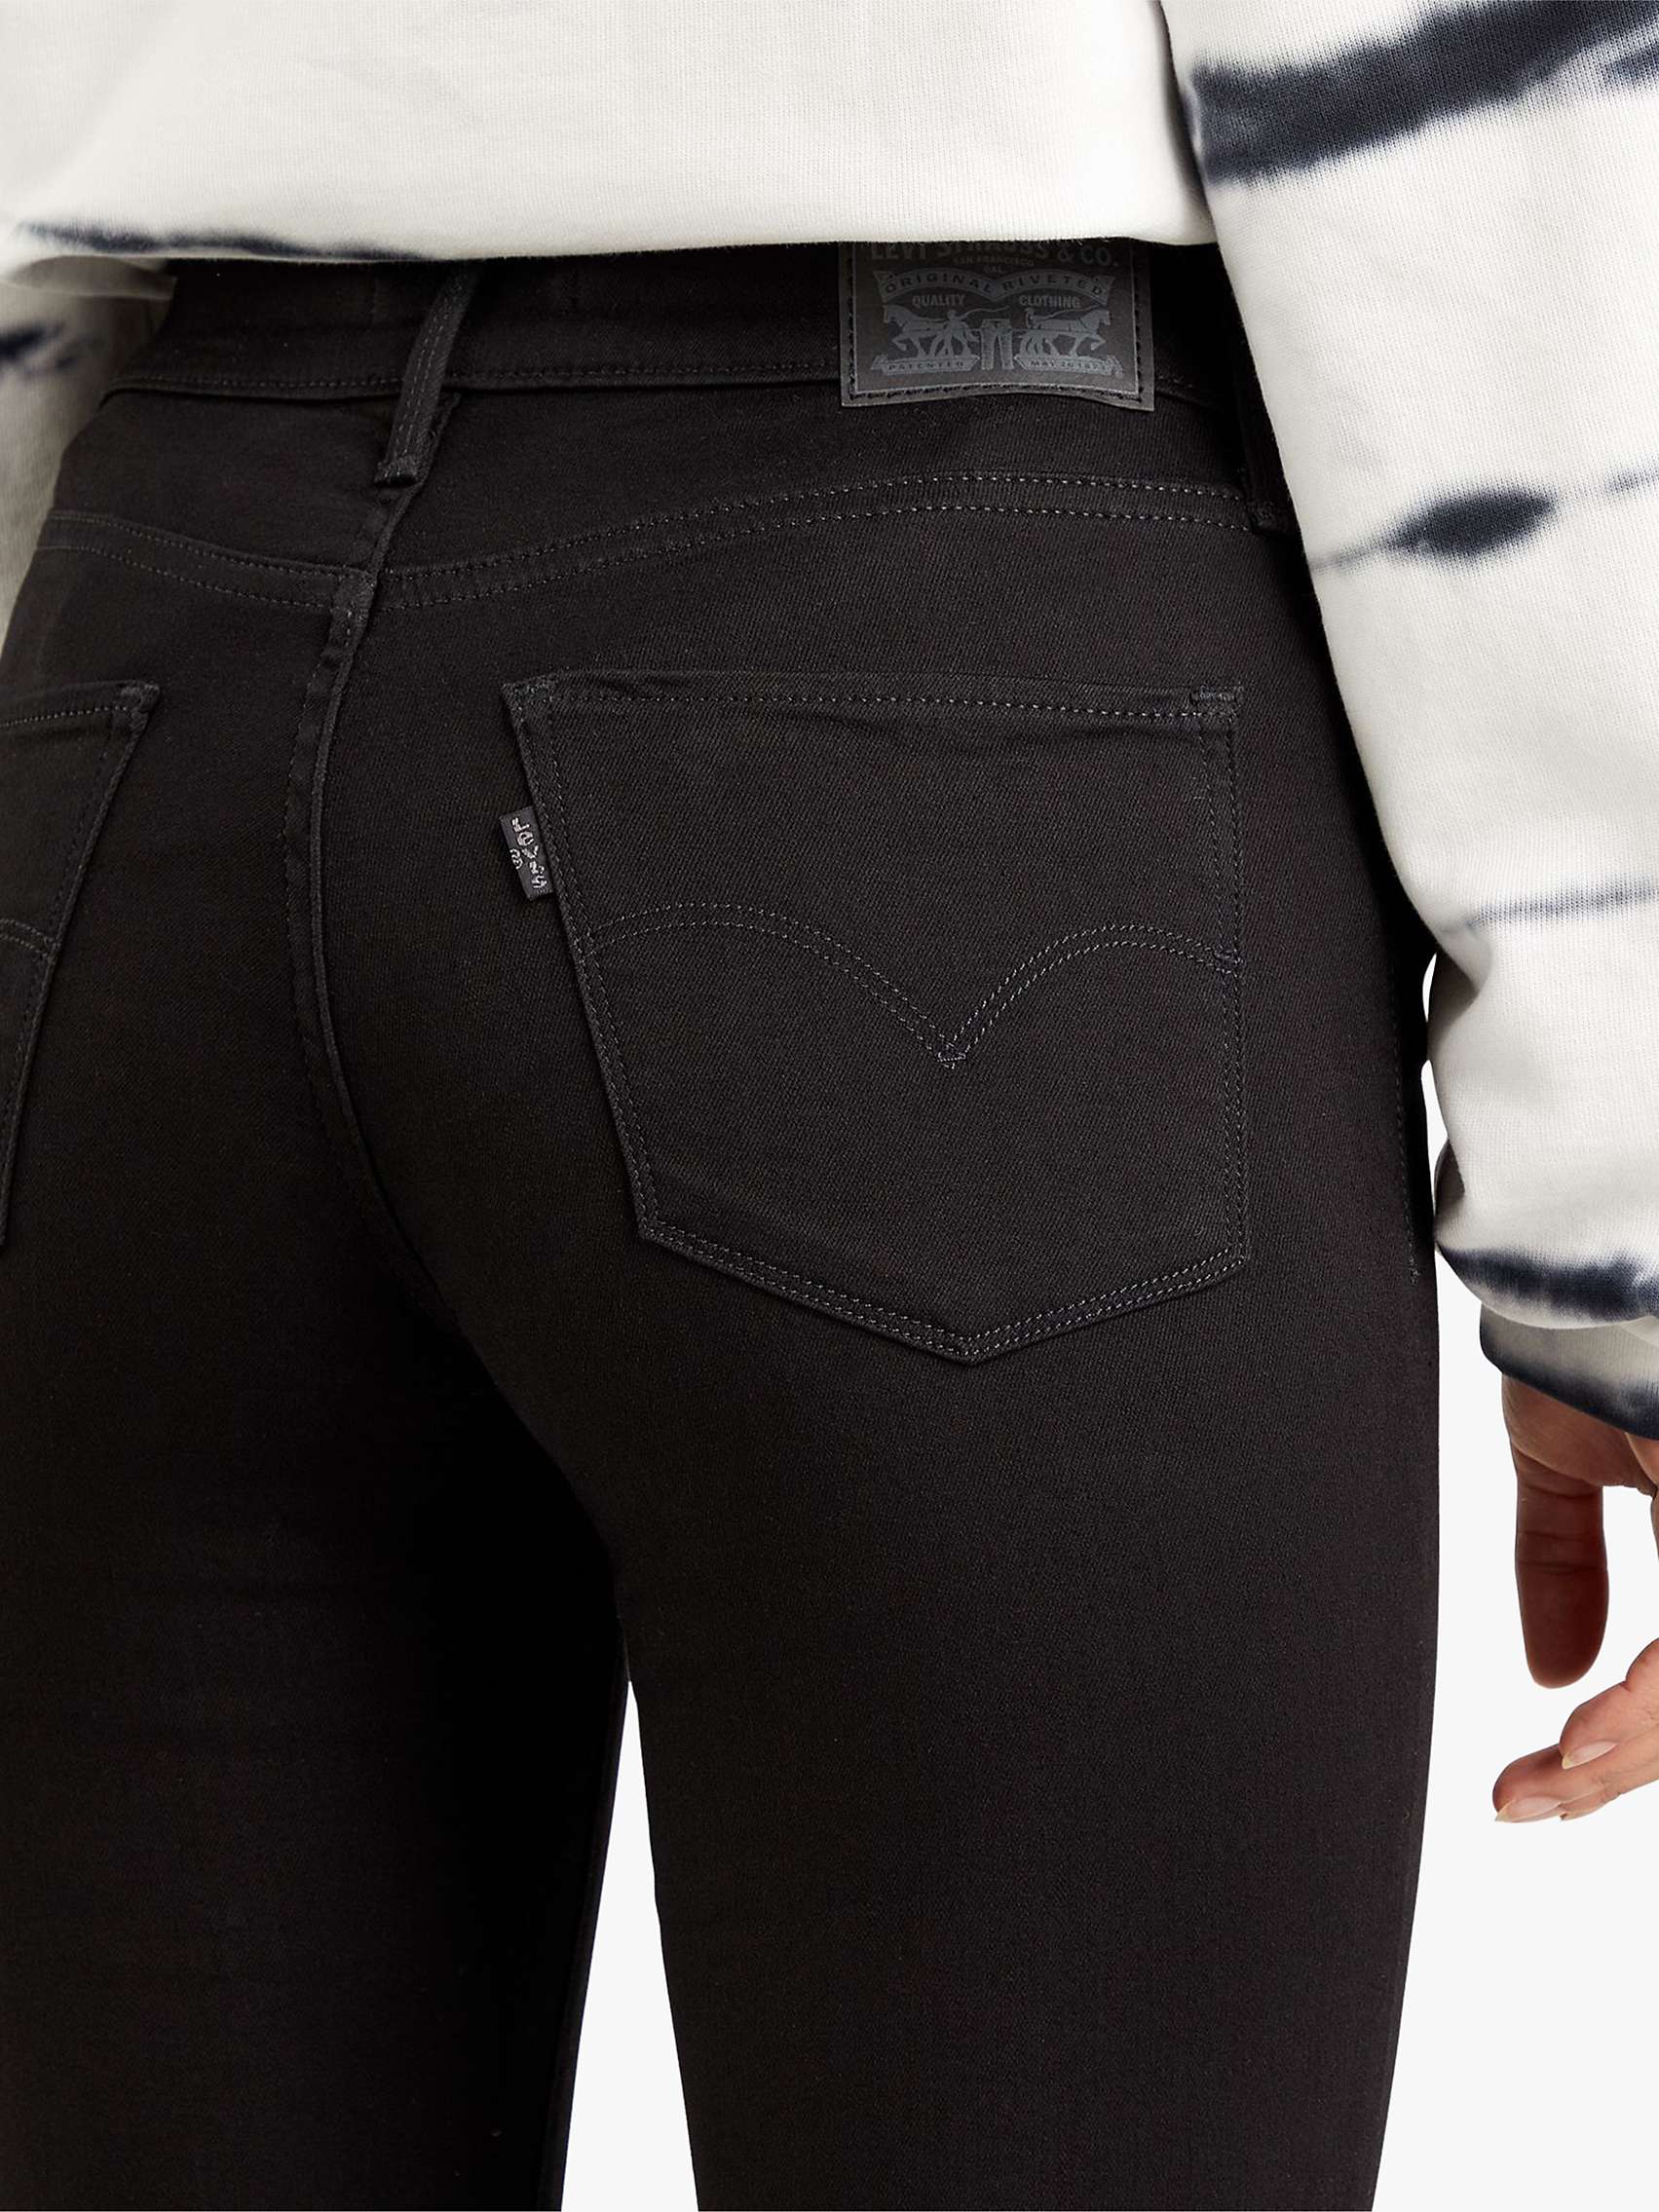 Buy Levi's 311 Shaping Skinny Jeans, Soft Black Online at johnlewis.com